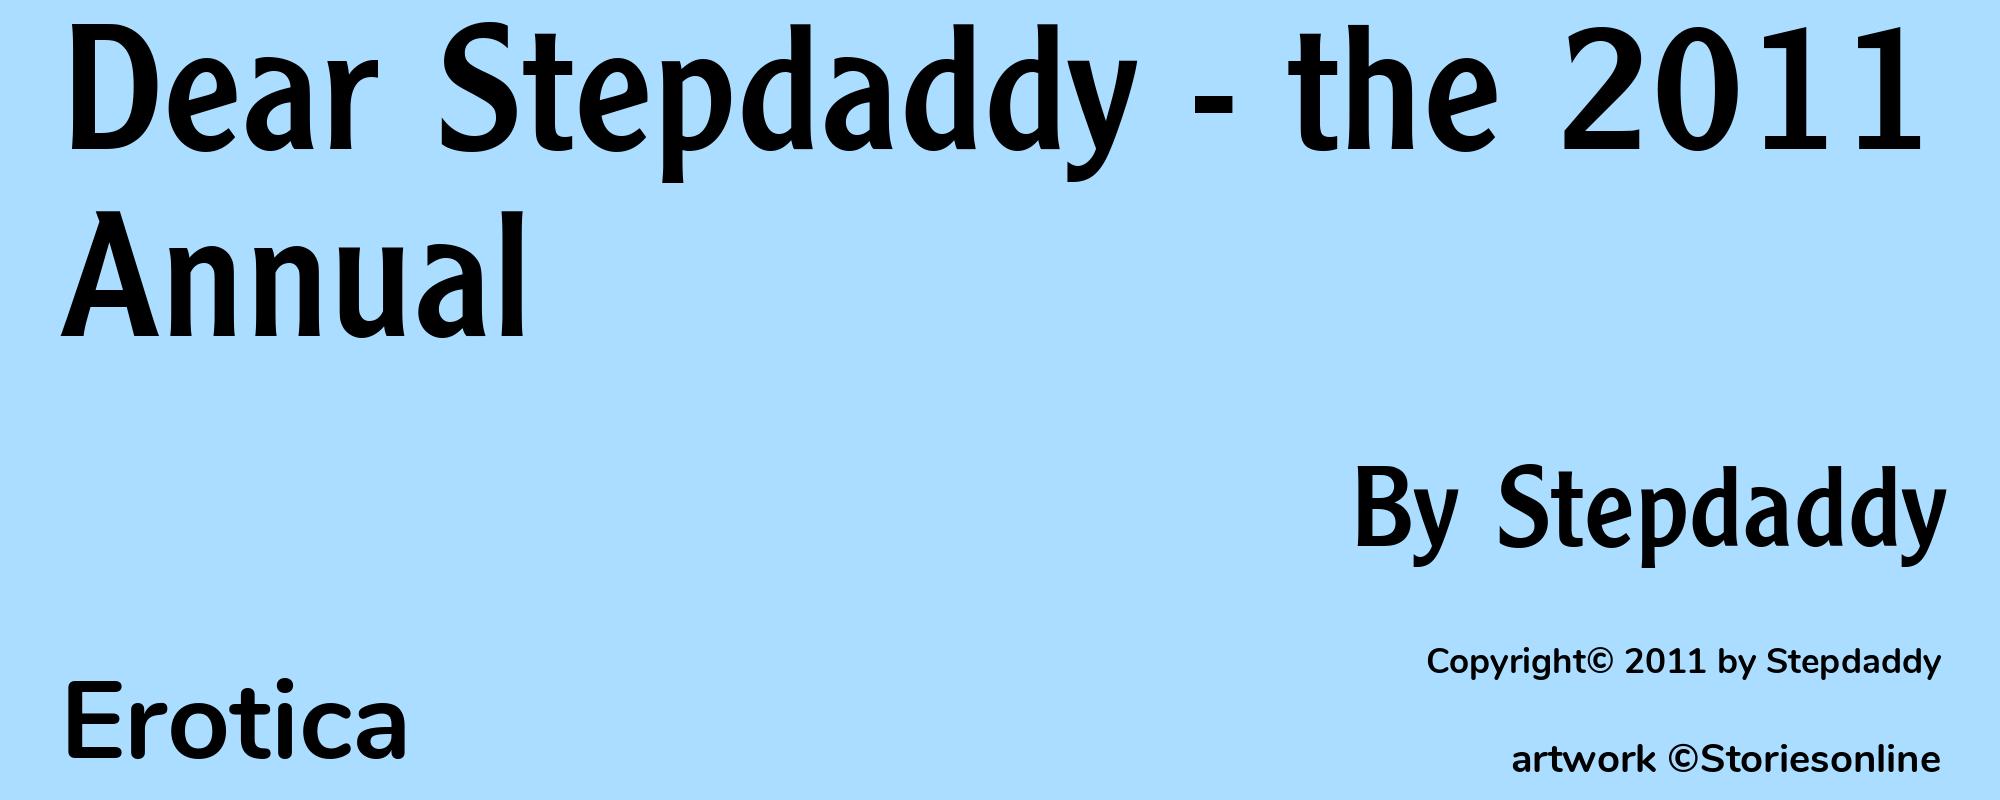 Dear Stepdaddy - the 2011 Annual - Cover